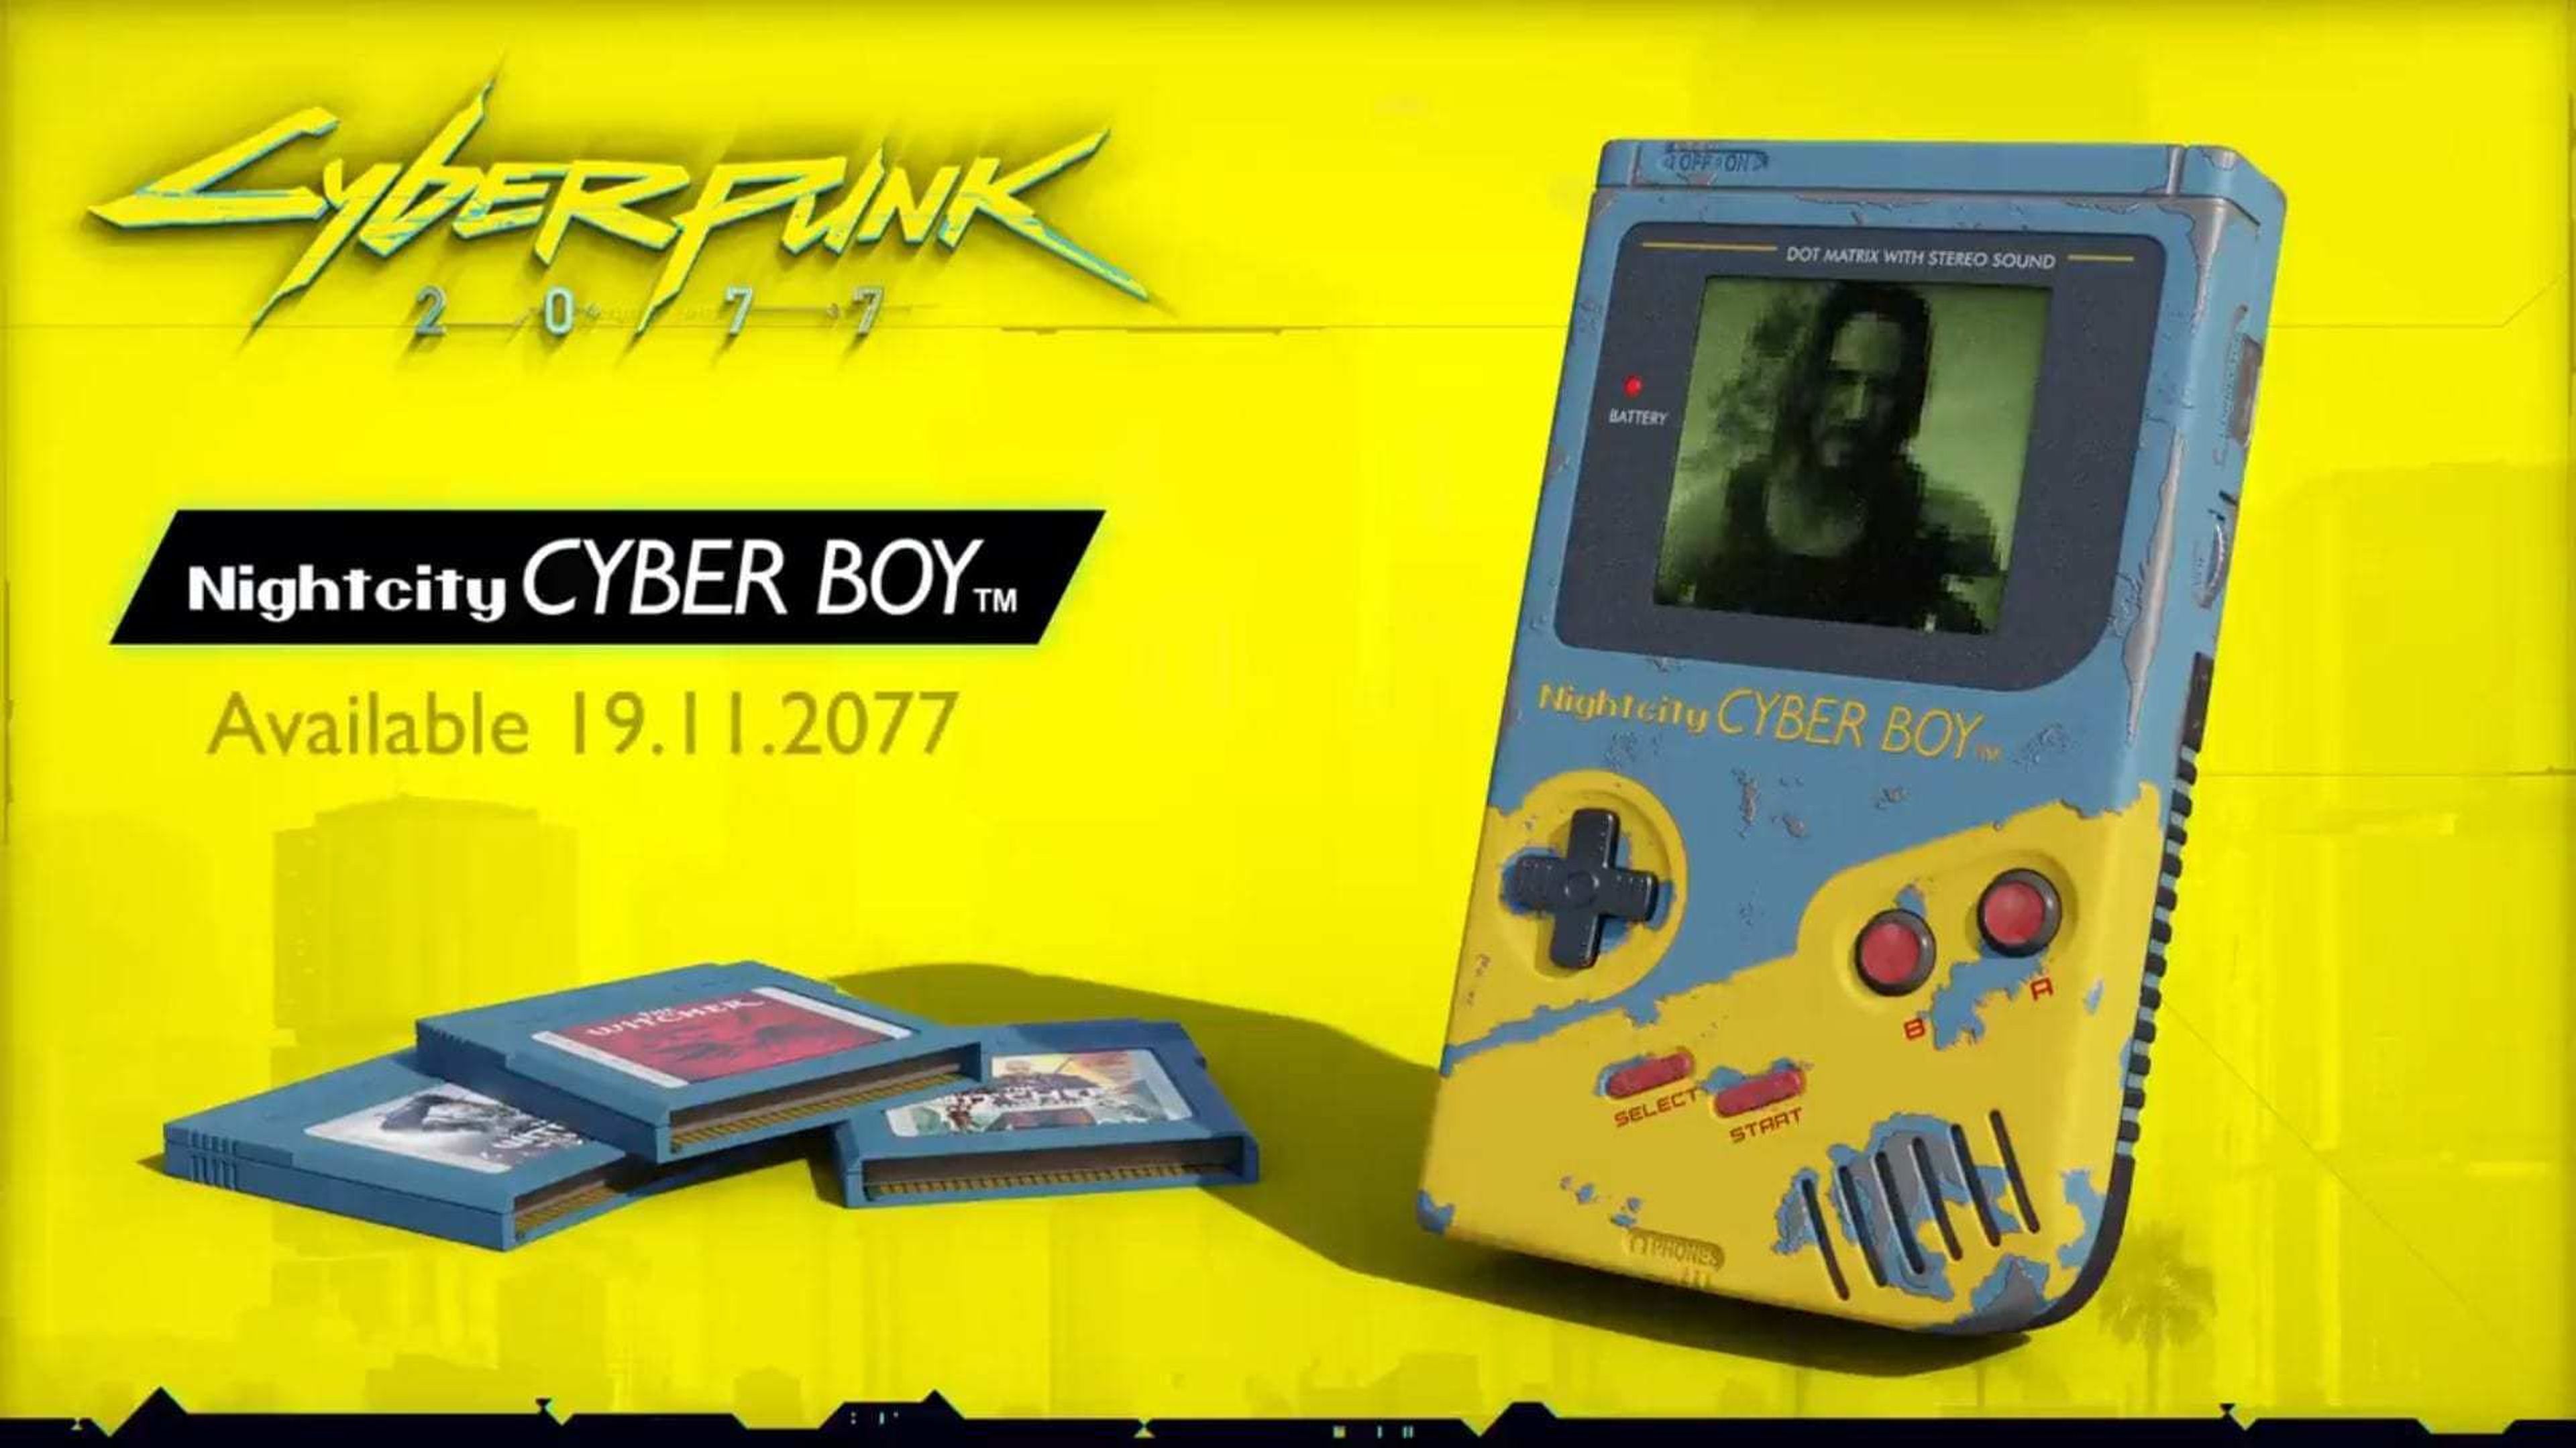 CyberPunk 2077 - Nightcity Cyber Boy